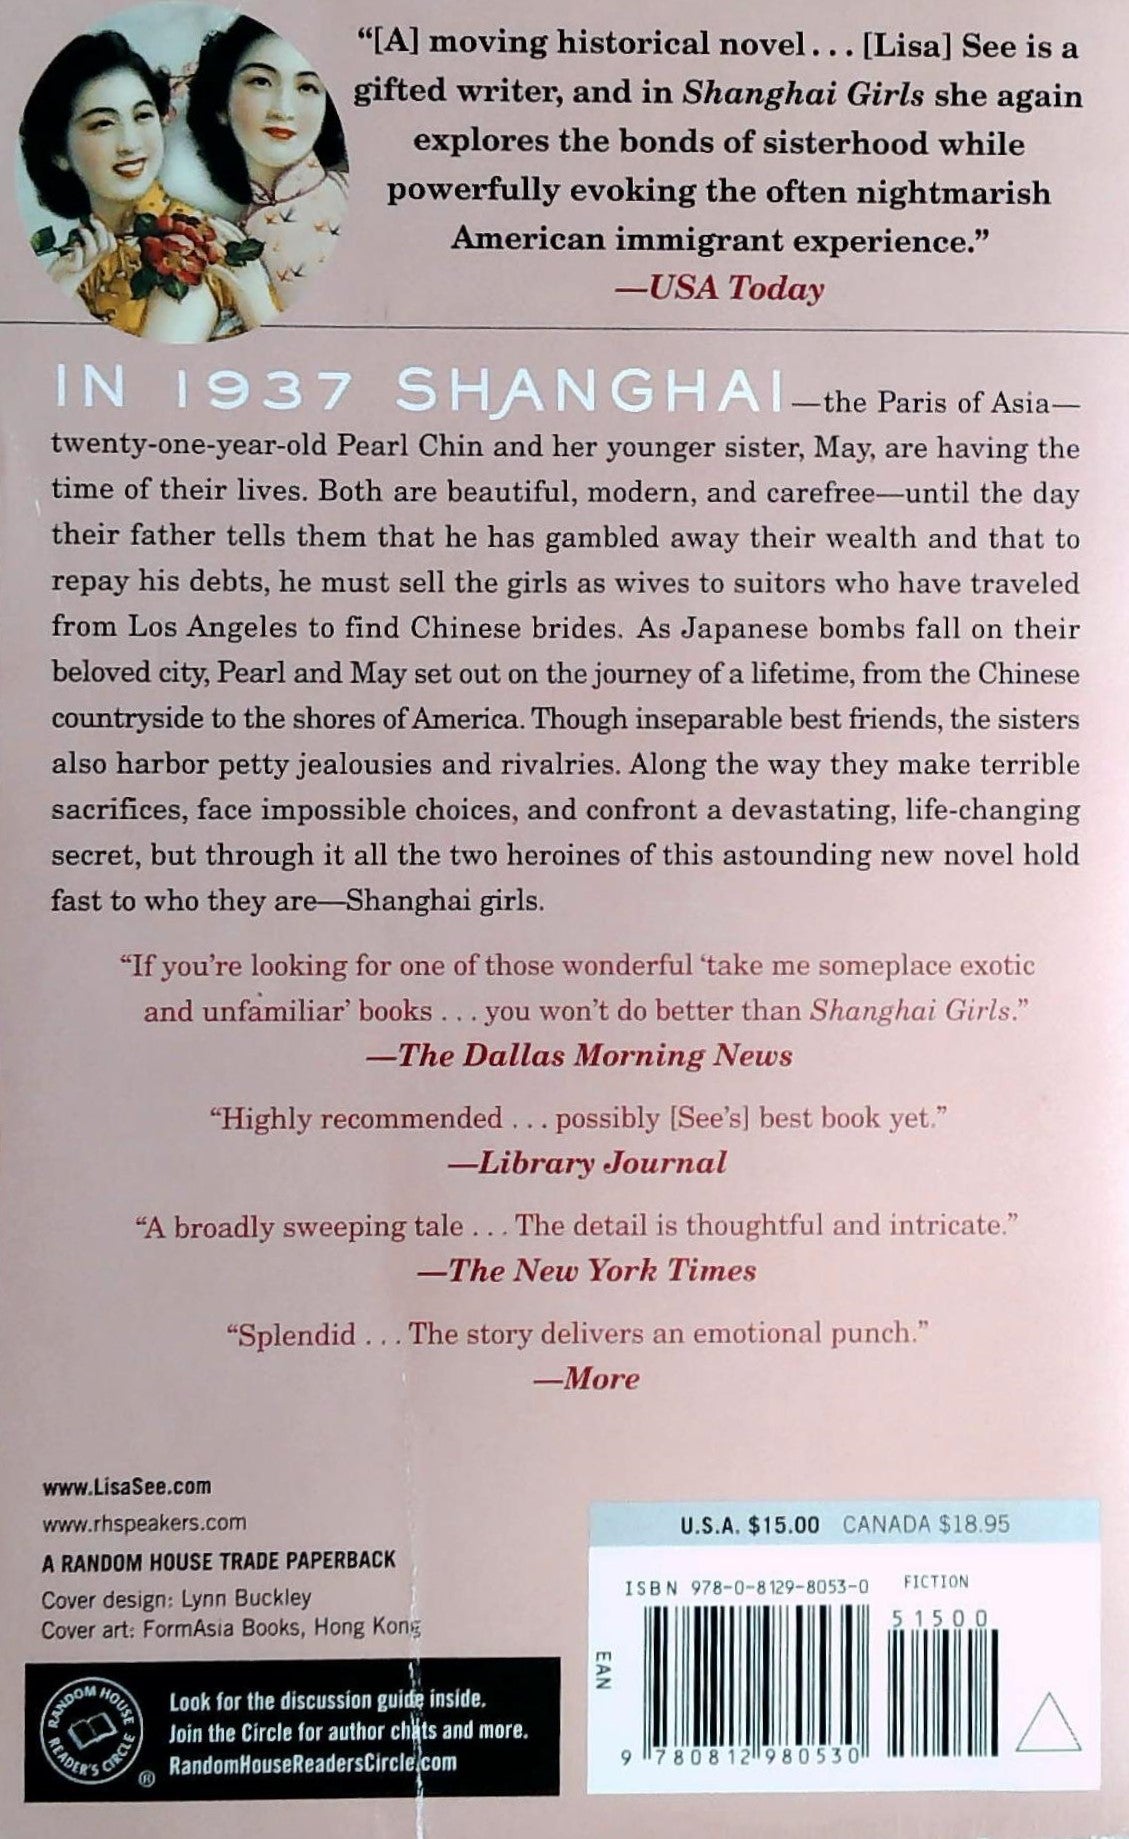 Shanghai Girls (Lisa See)